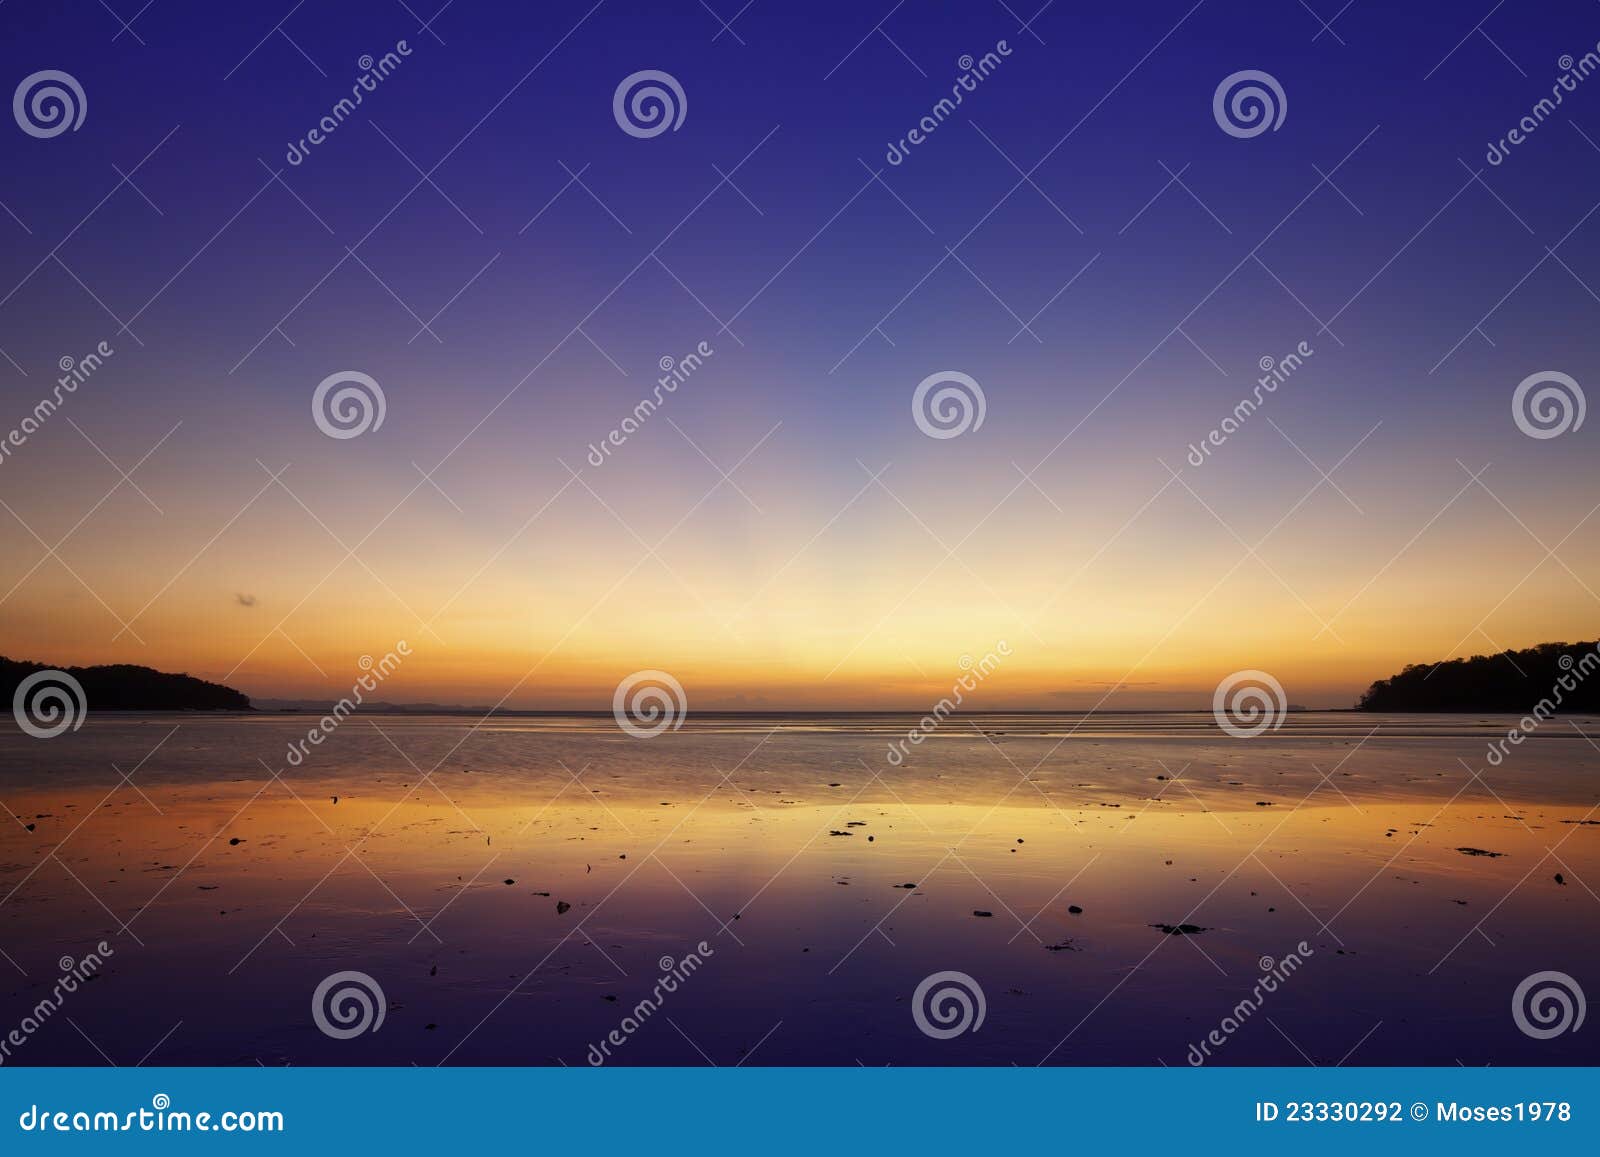 Sunrise scene stock photo. Image of island, scenic, beach - 23330292